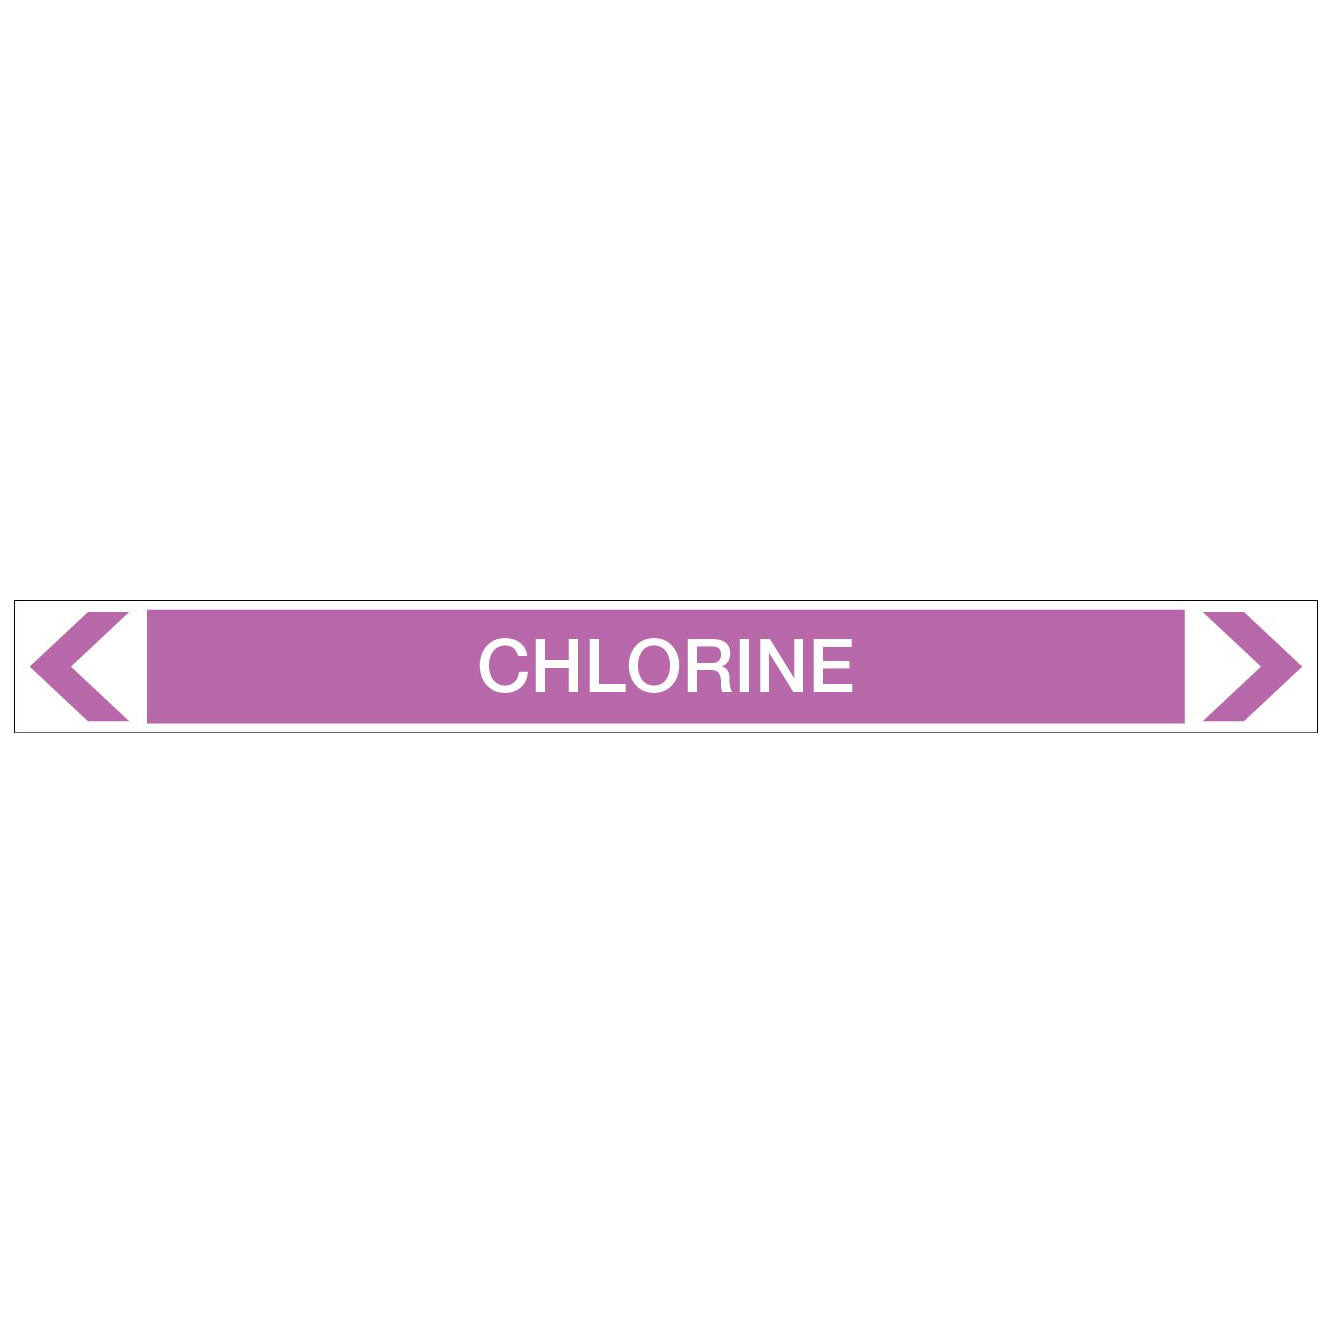 Alkalis / Acids - Chlorine - Pipe Marker Sticker